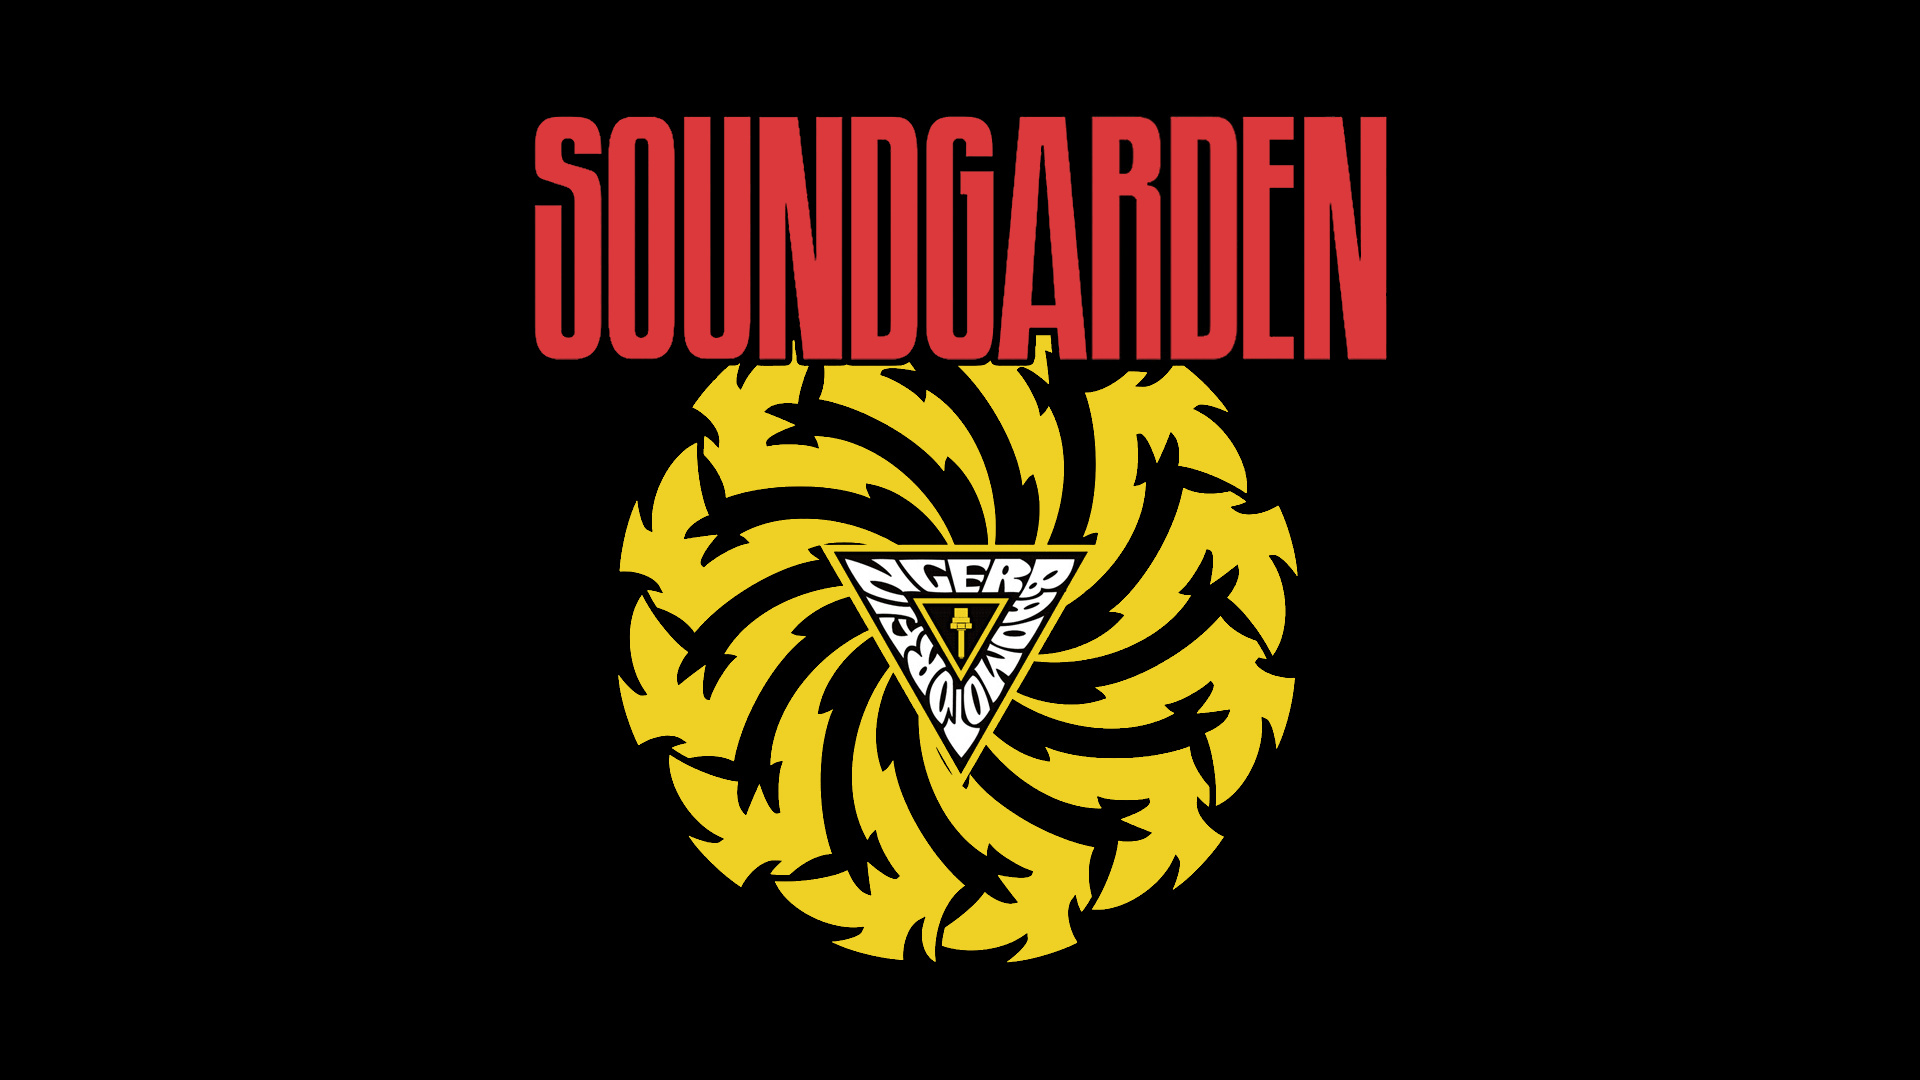 Soundgarden, Band wallpapers, Rock backgrounds, 1920x1080 Full HD Desktop